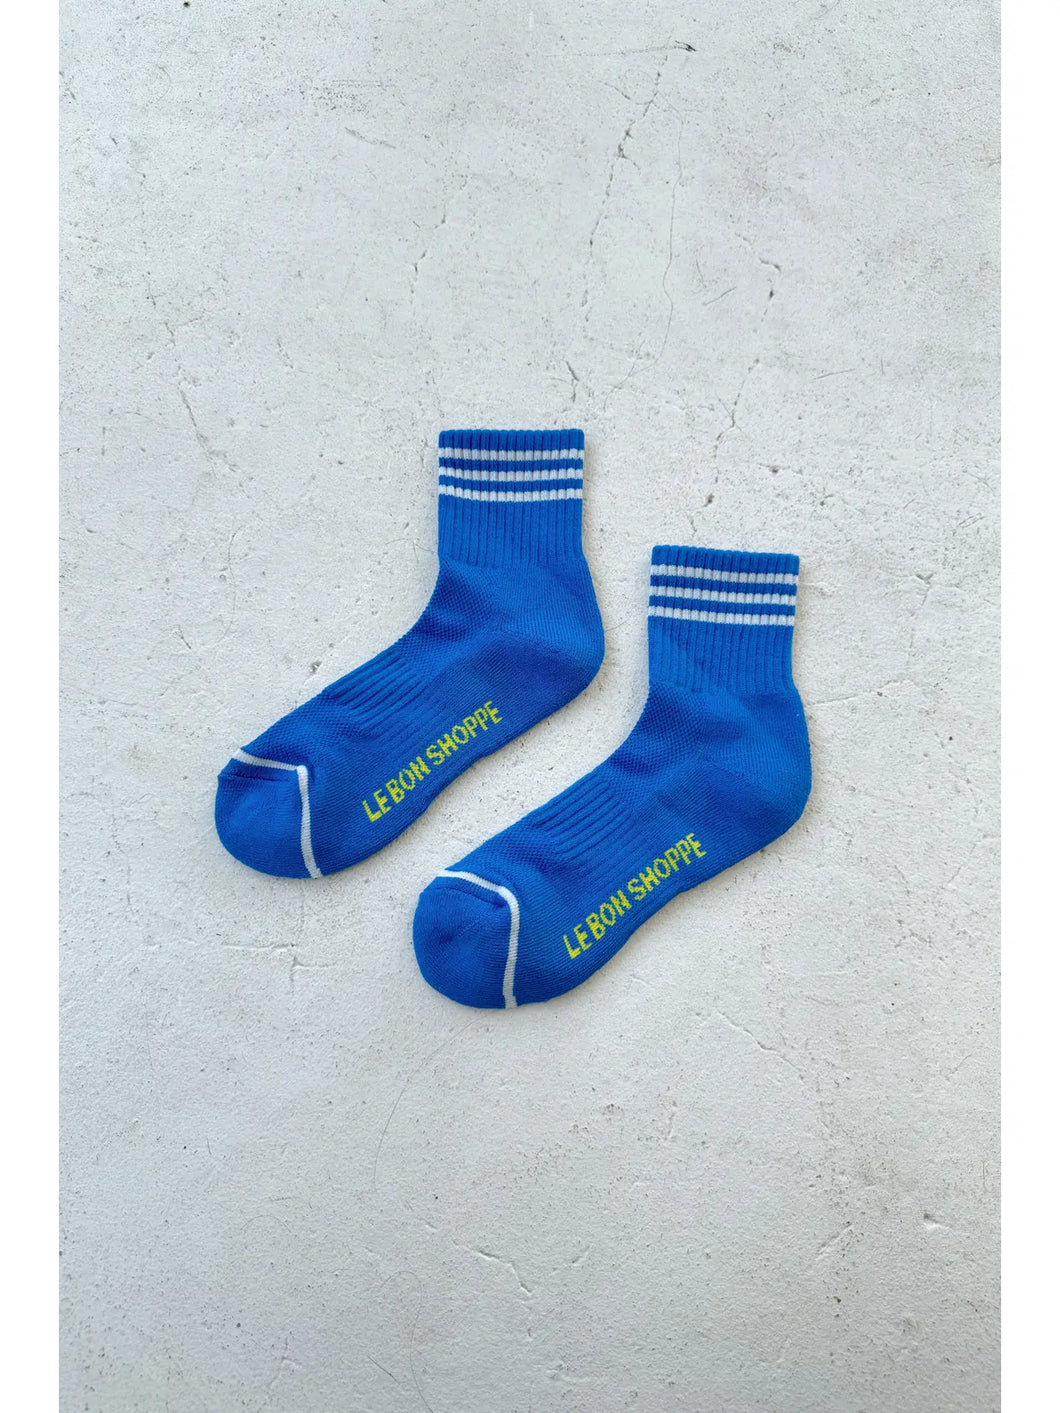 Le Bon Girlfriend  Socks -  Royal Blue